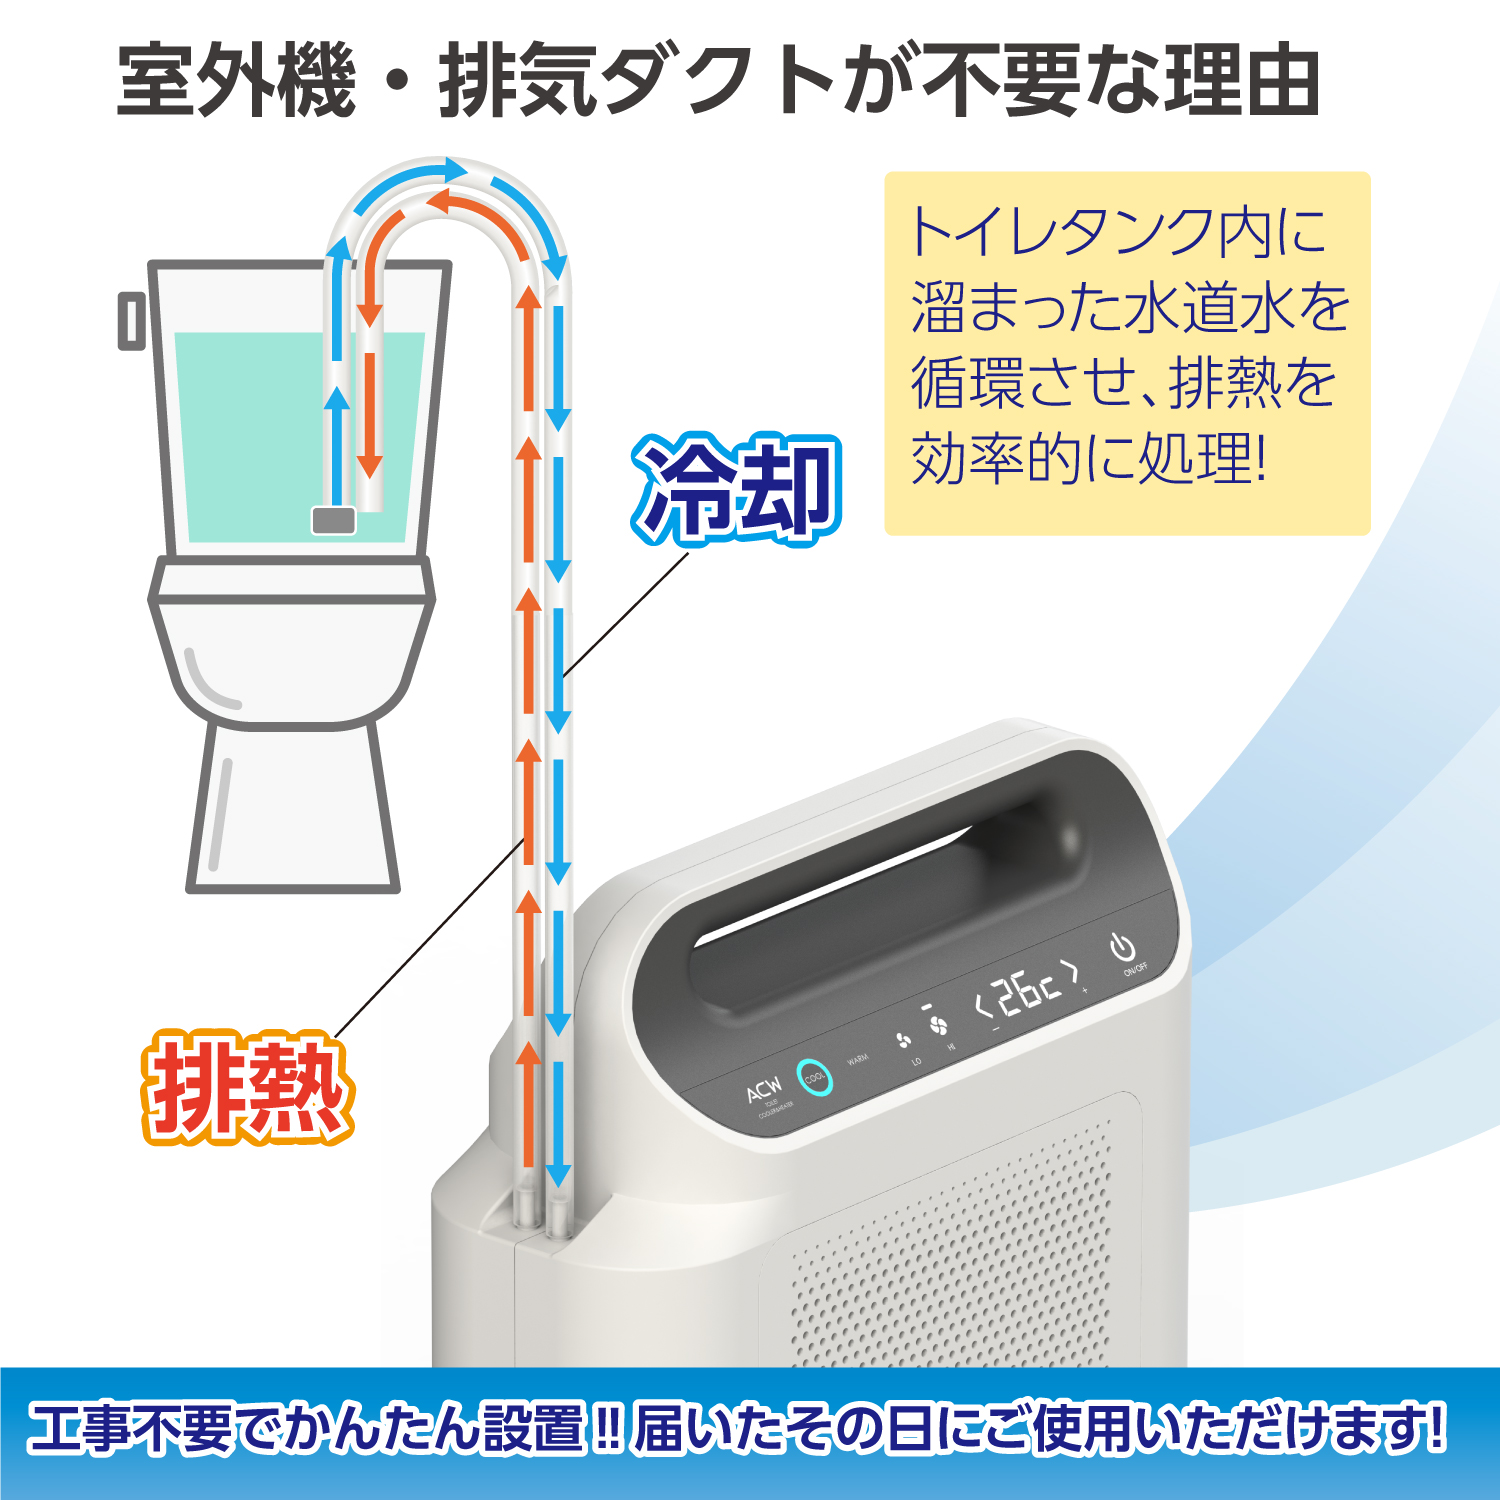 ACW トイレ用冷暖房エアコン A10-TA-208